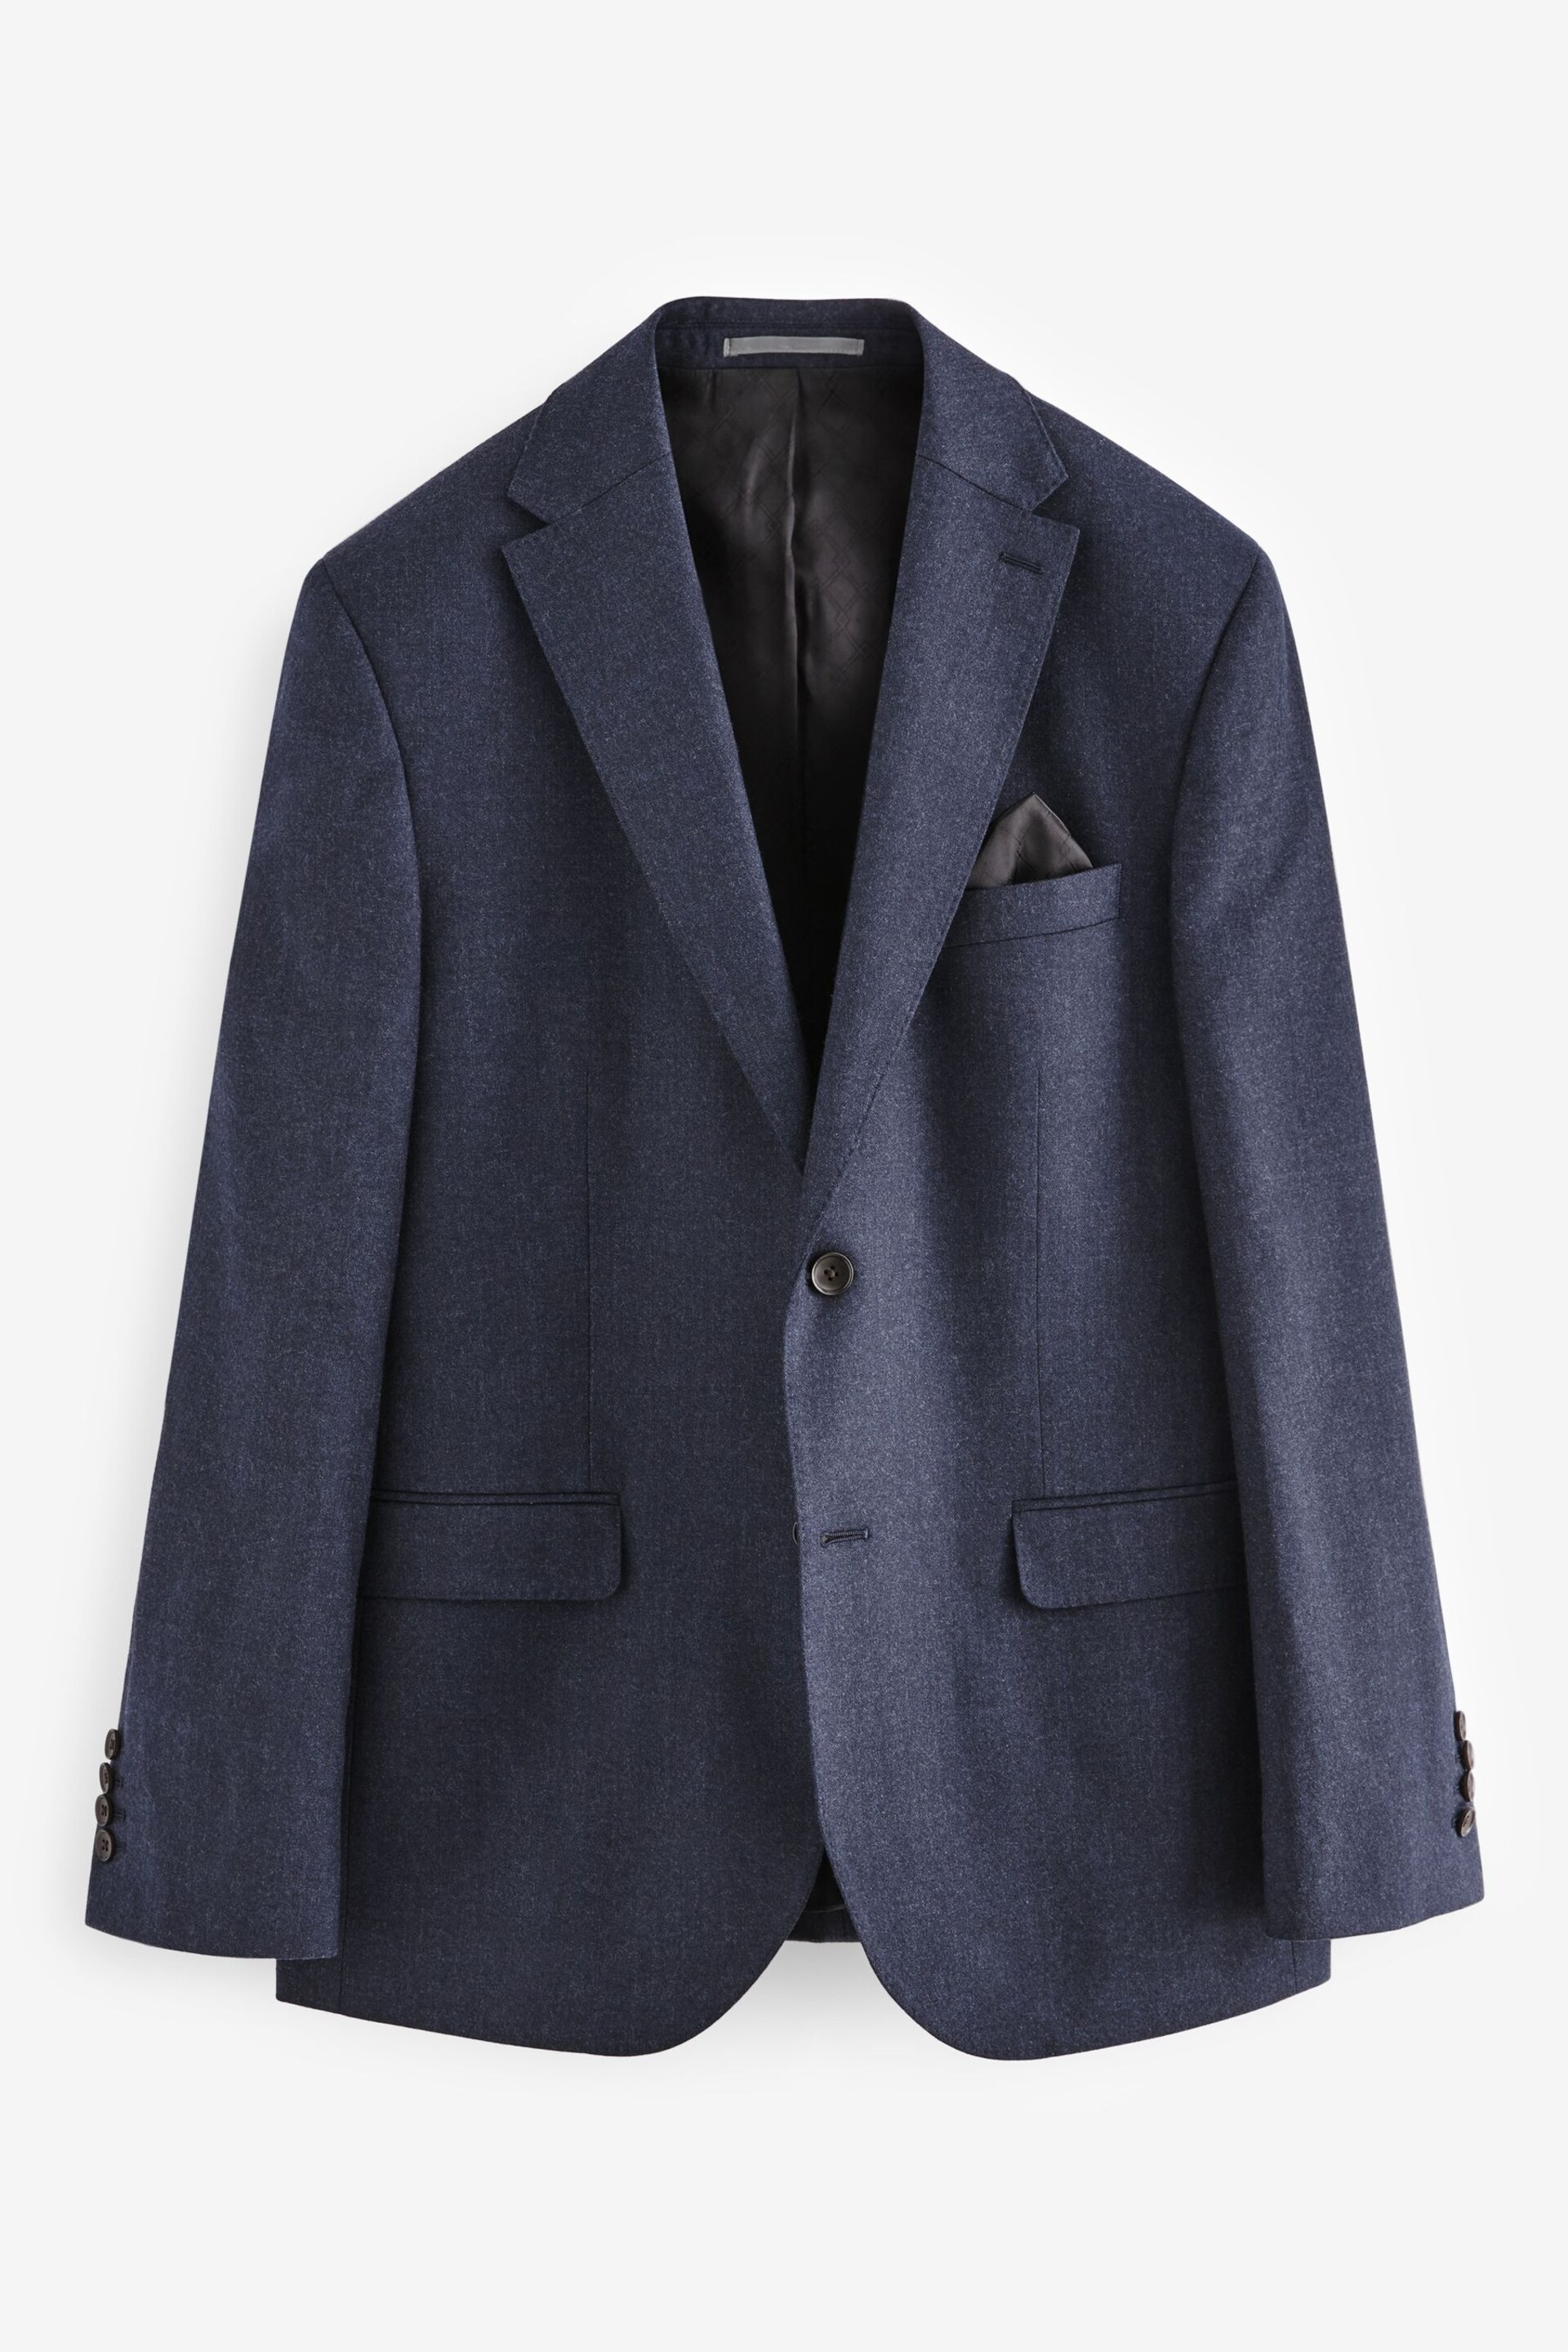 Blue Tailored Fit Signature Barberis Italian Fabric Wool Flannel Suit Jacket - Image 7 of 14